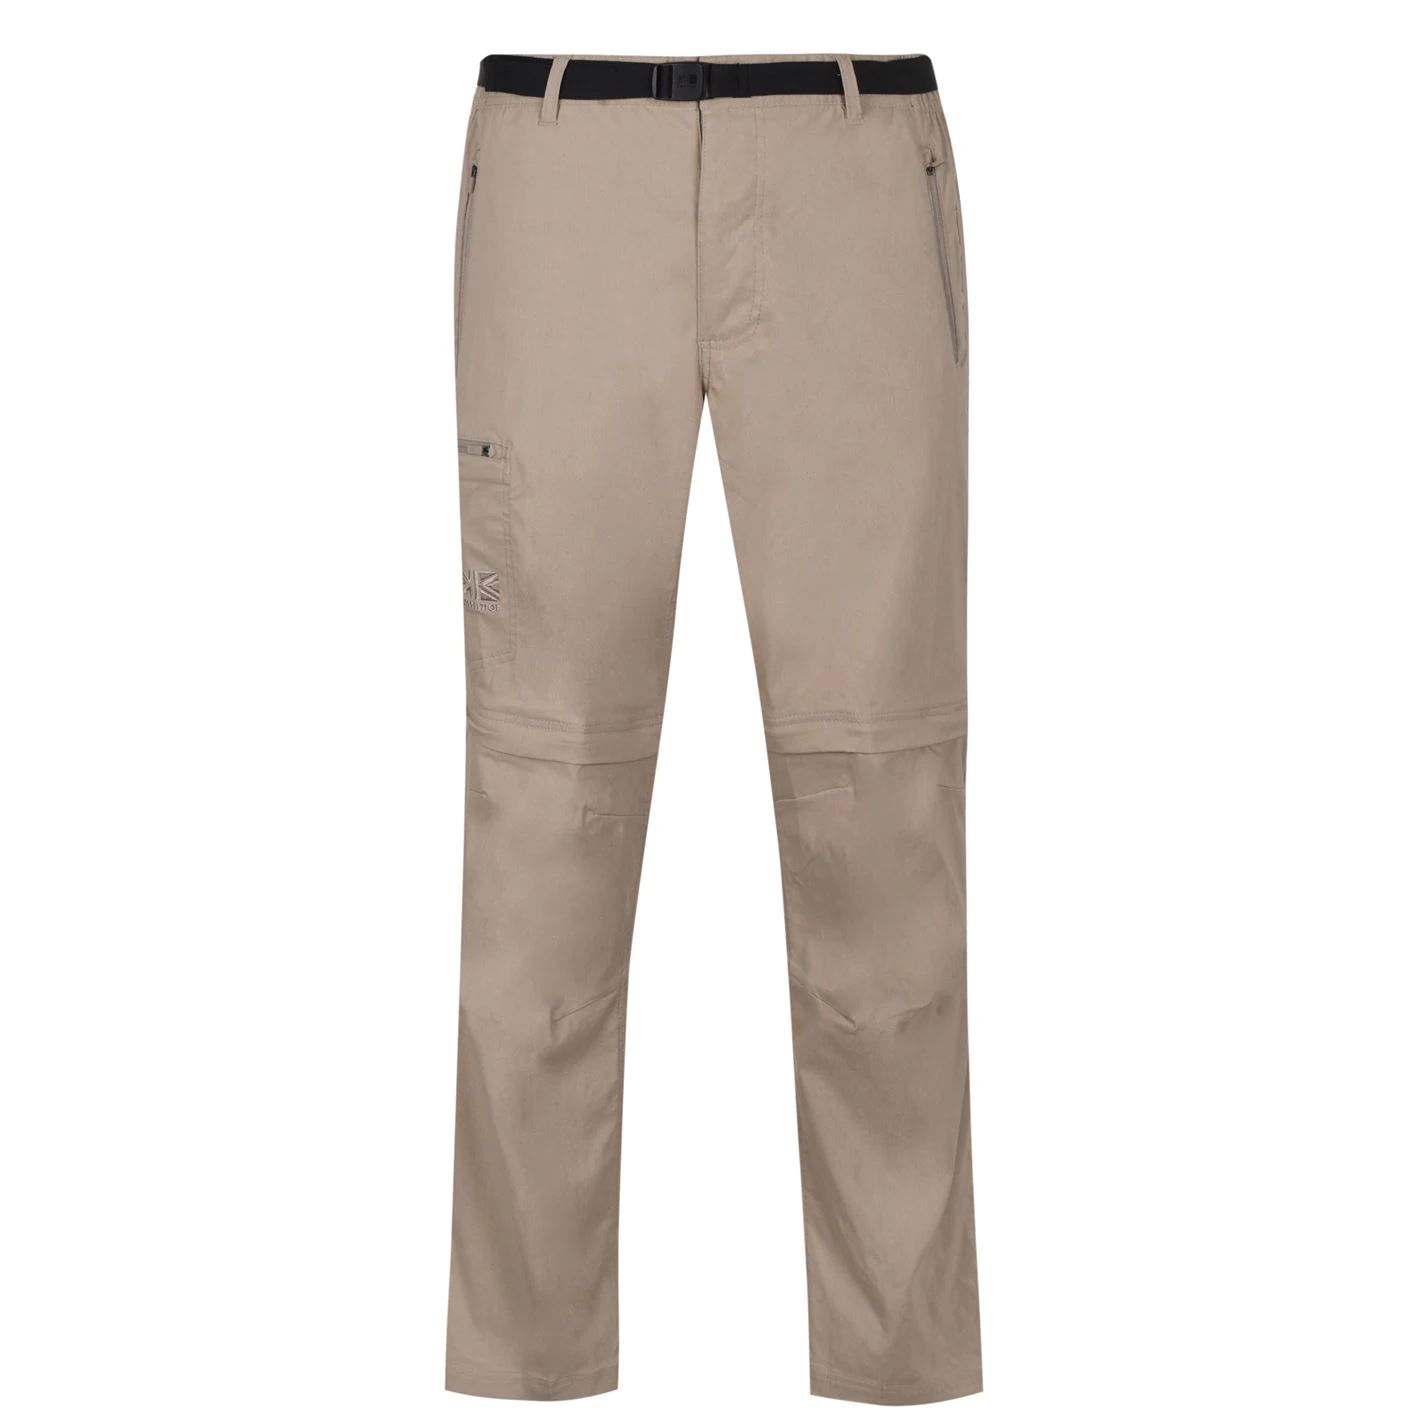 pánské outdoor kalhoty/šortky KARRIMOR - BEIGE